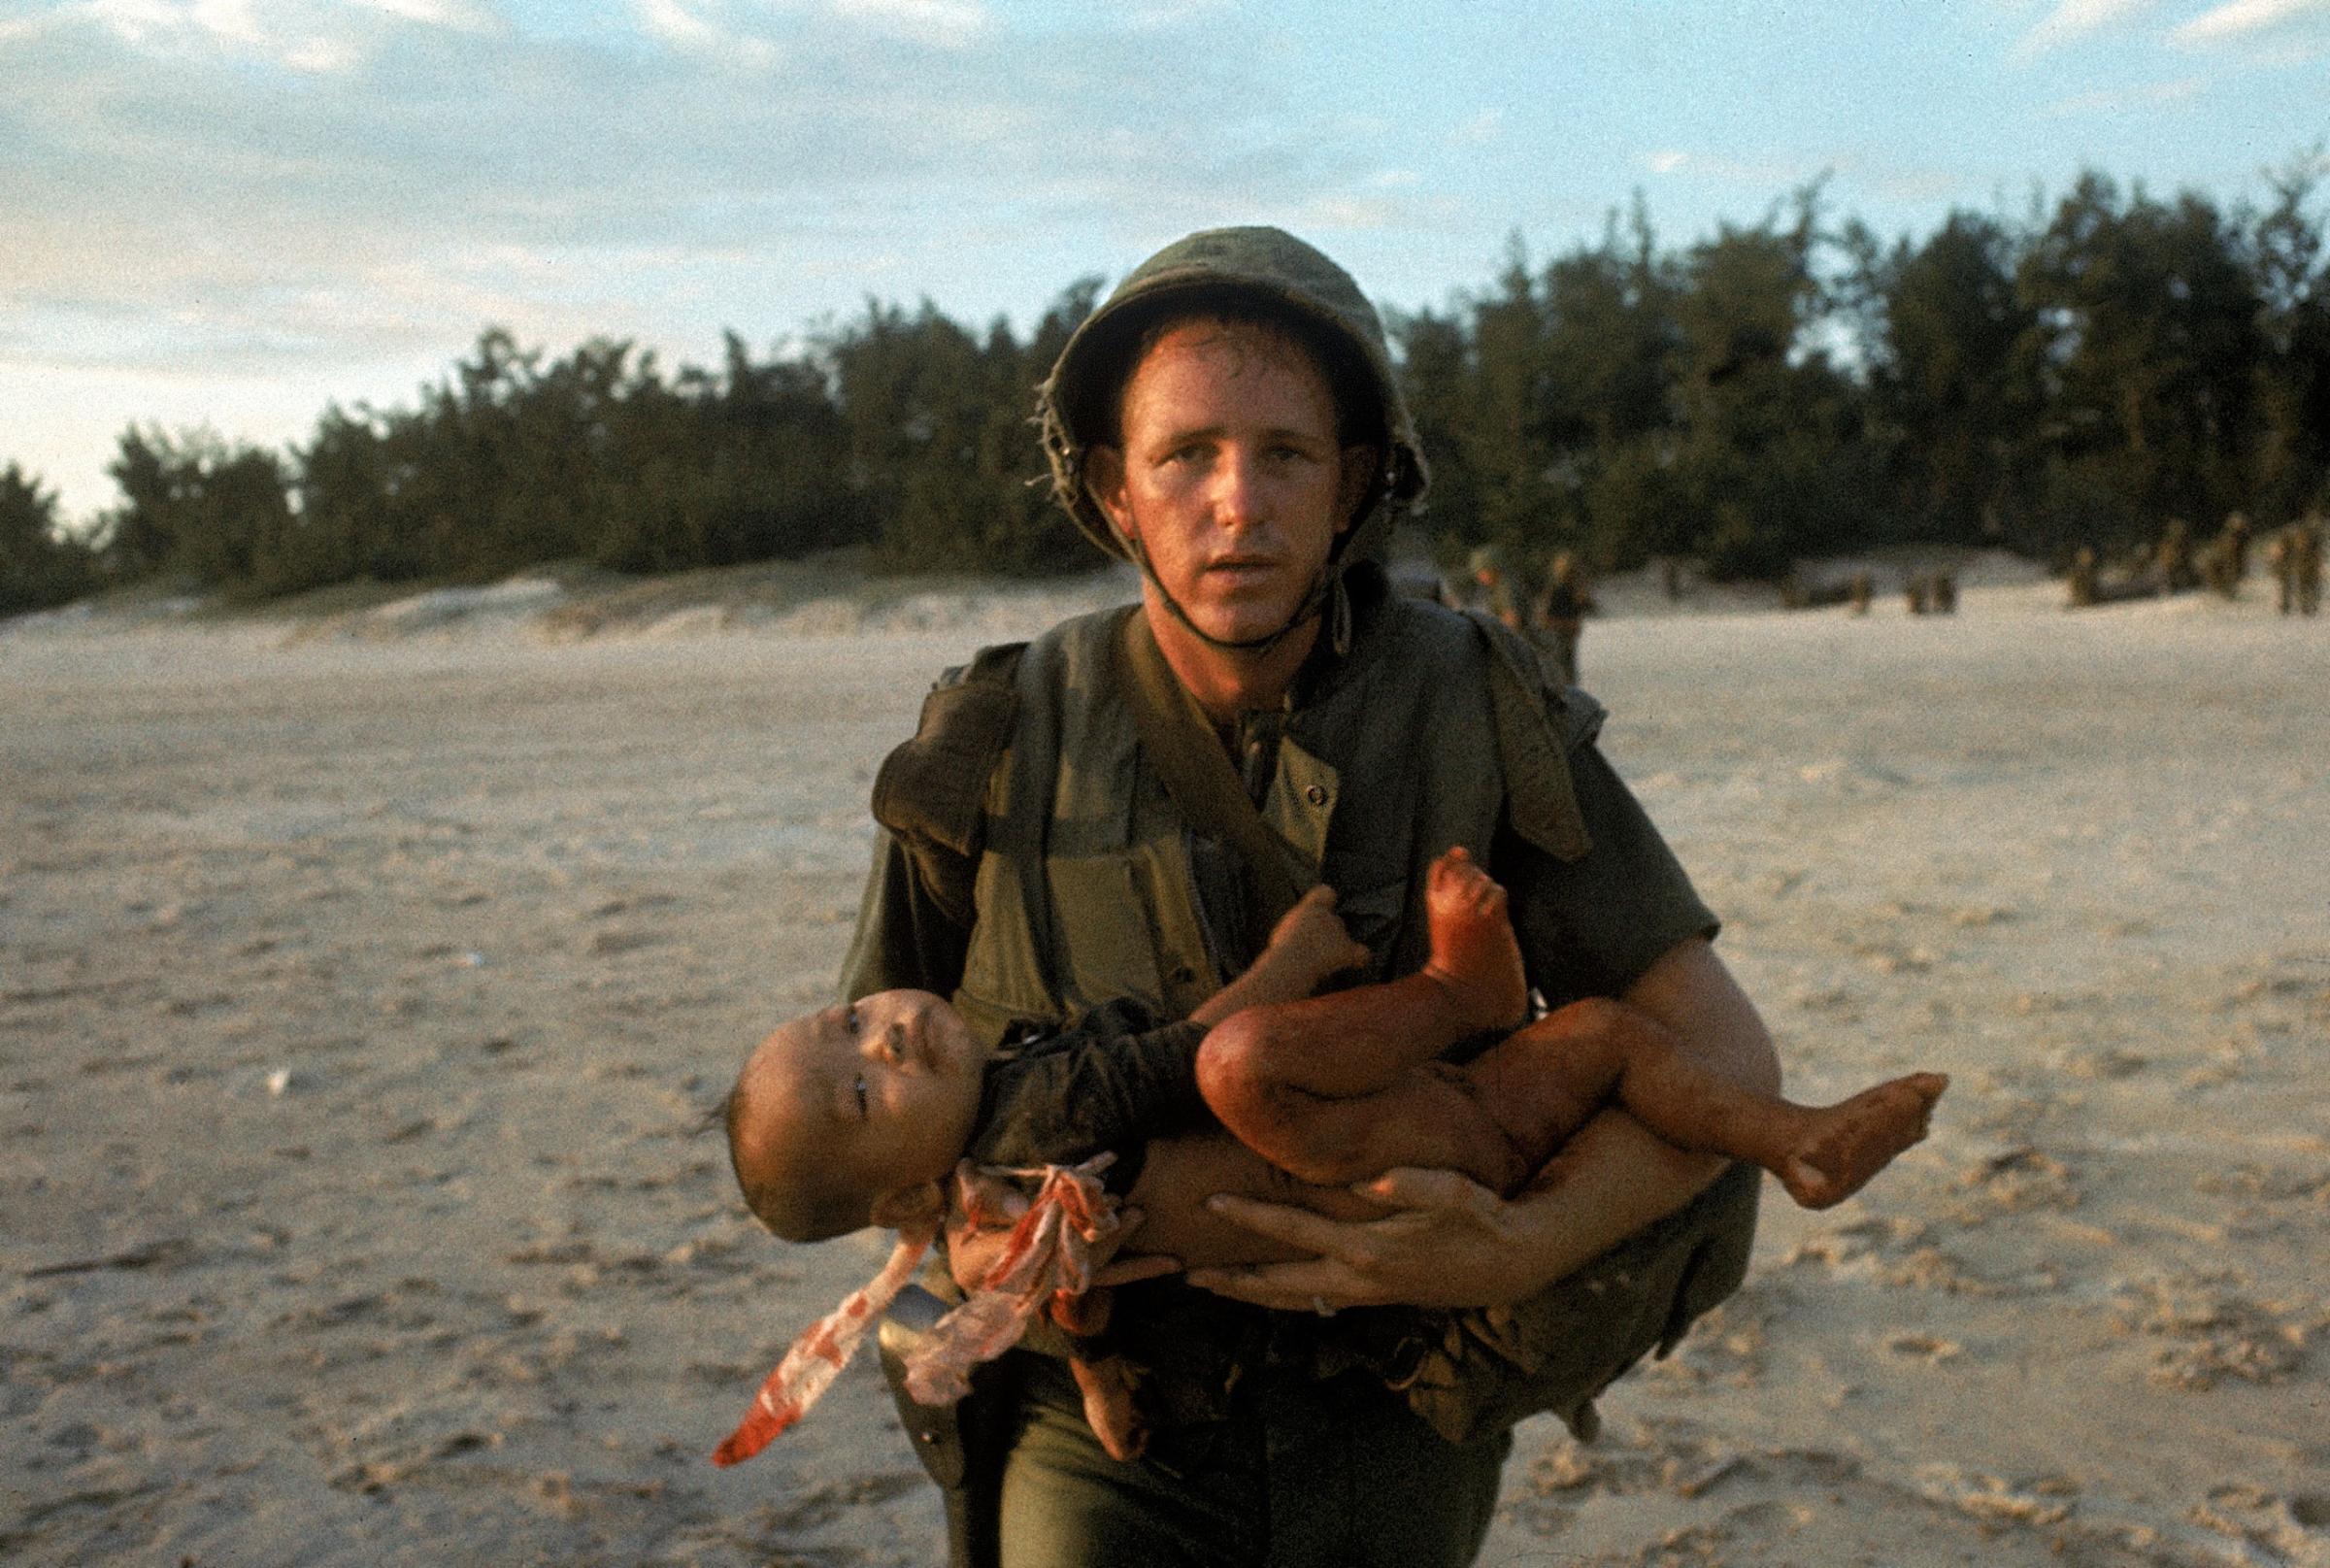 US Marine holding an injured Vietnamese child.